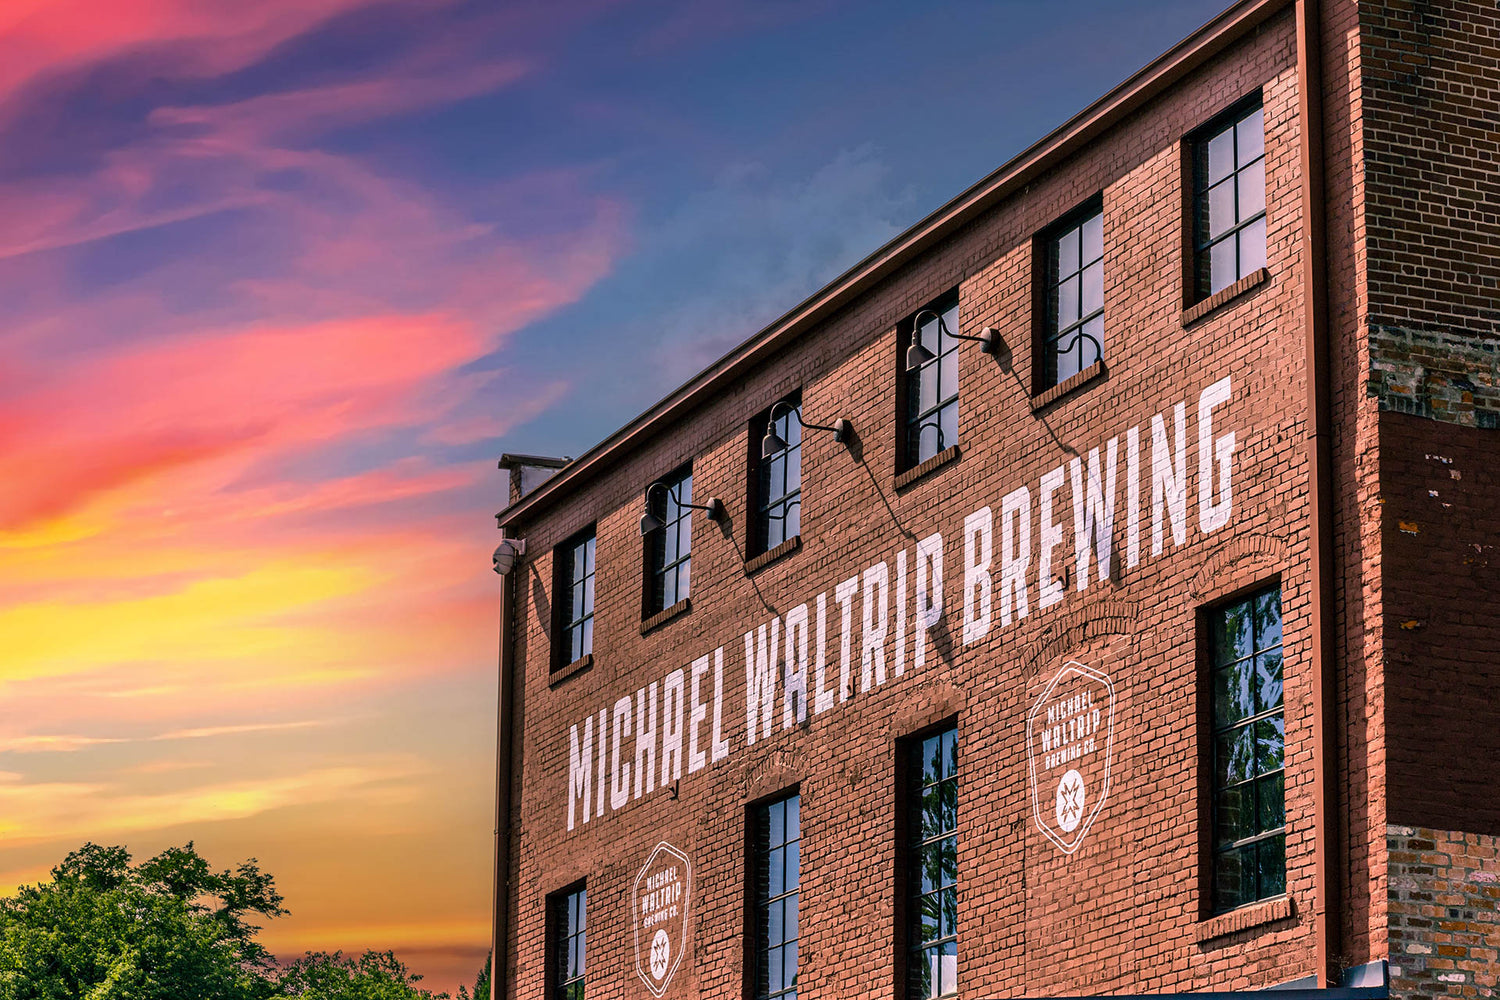 Michael Waltrip Brewing Company store